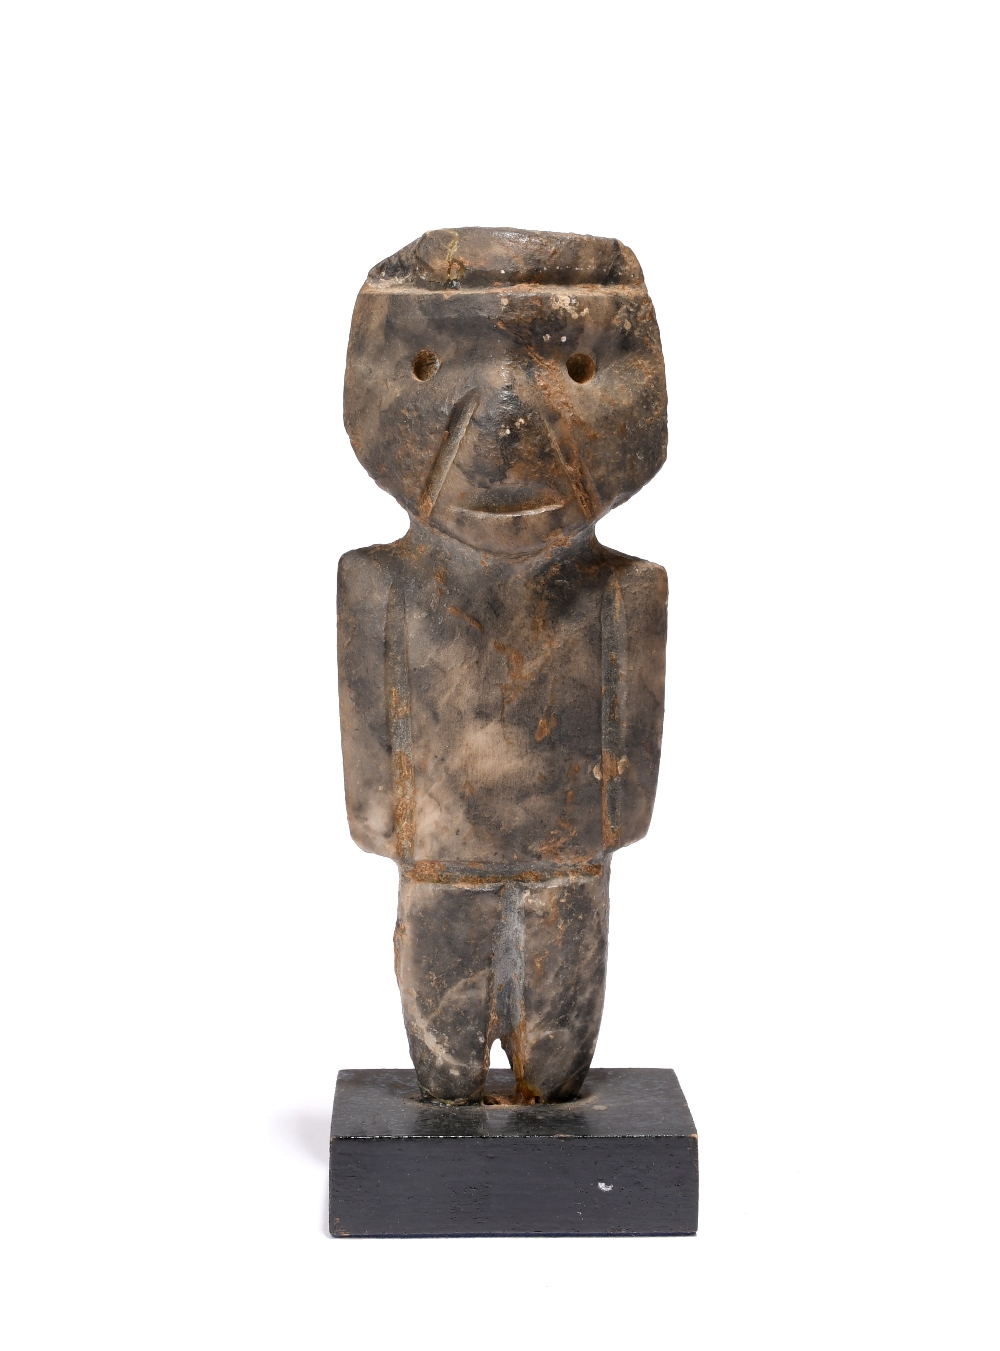 A Mezcala standing figure Guerrero, Mexico diorite, circa 300BC - 100AD, 17.2cm, mounted in a wood